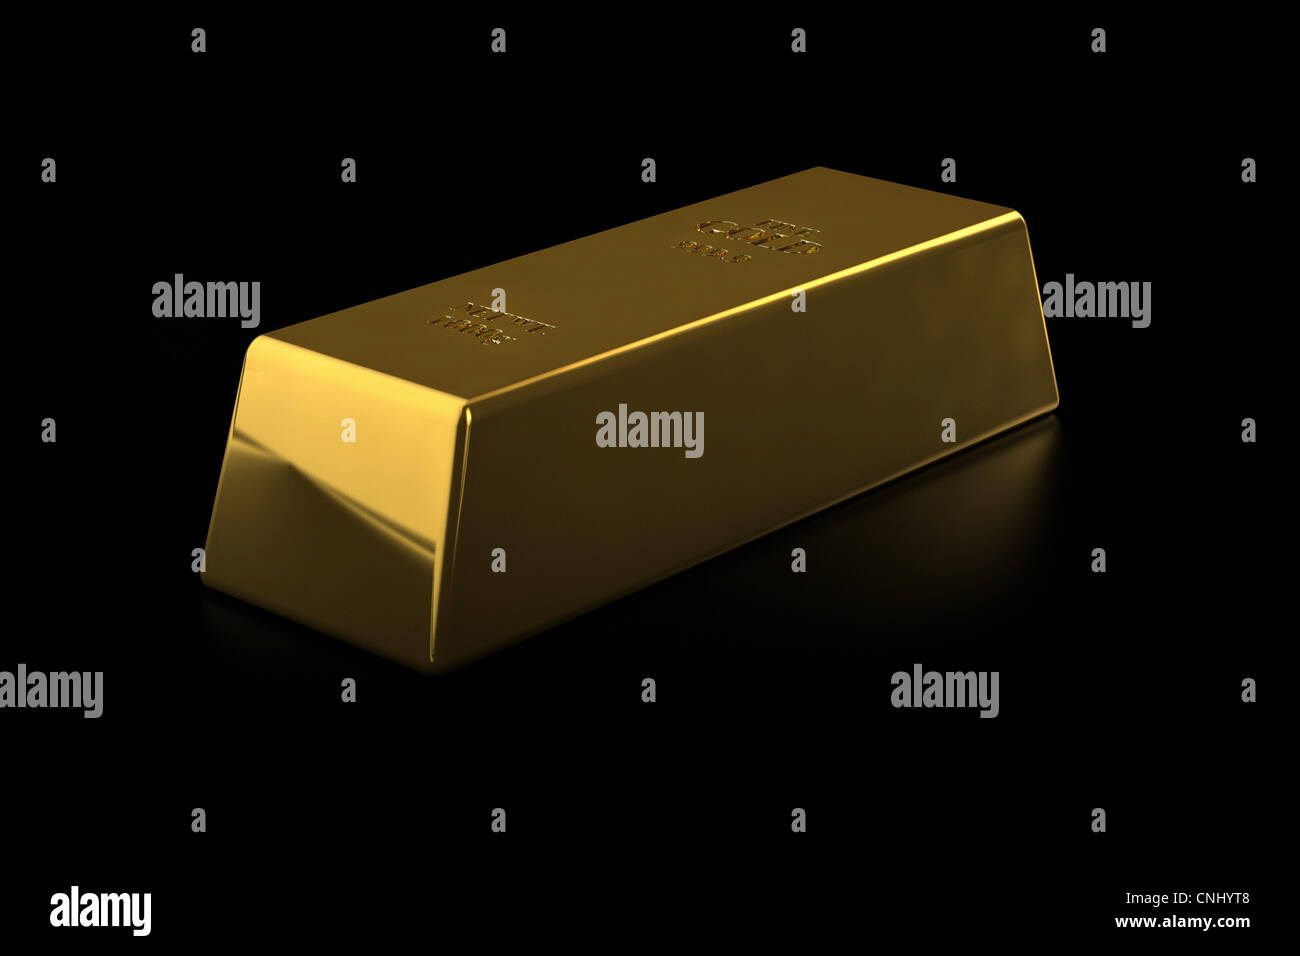 Fine gold bar on black background Stock Photo